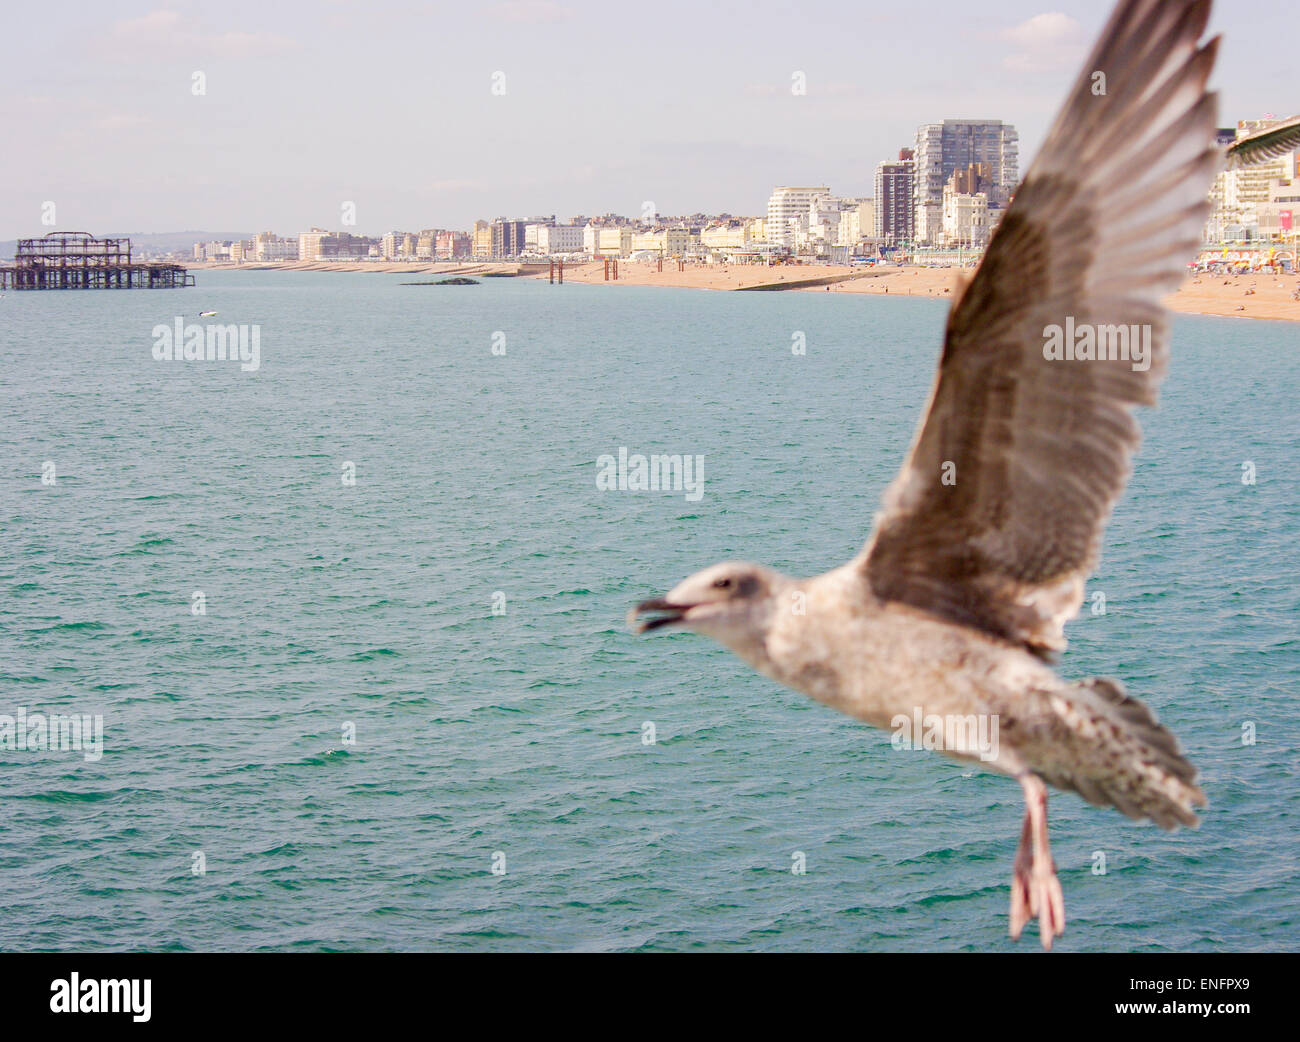 Seagull photo bombs photograph, waterfront Stock Photo